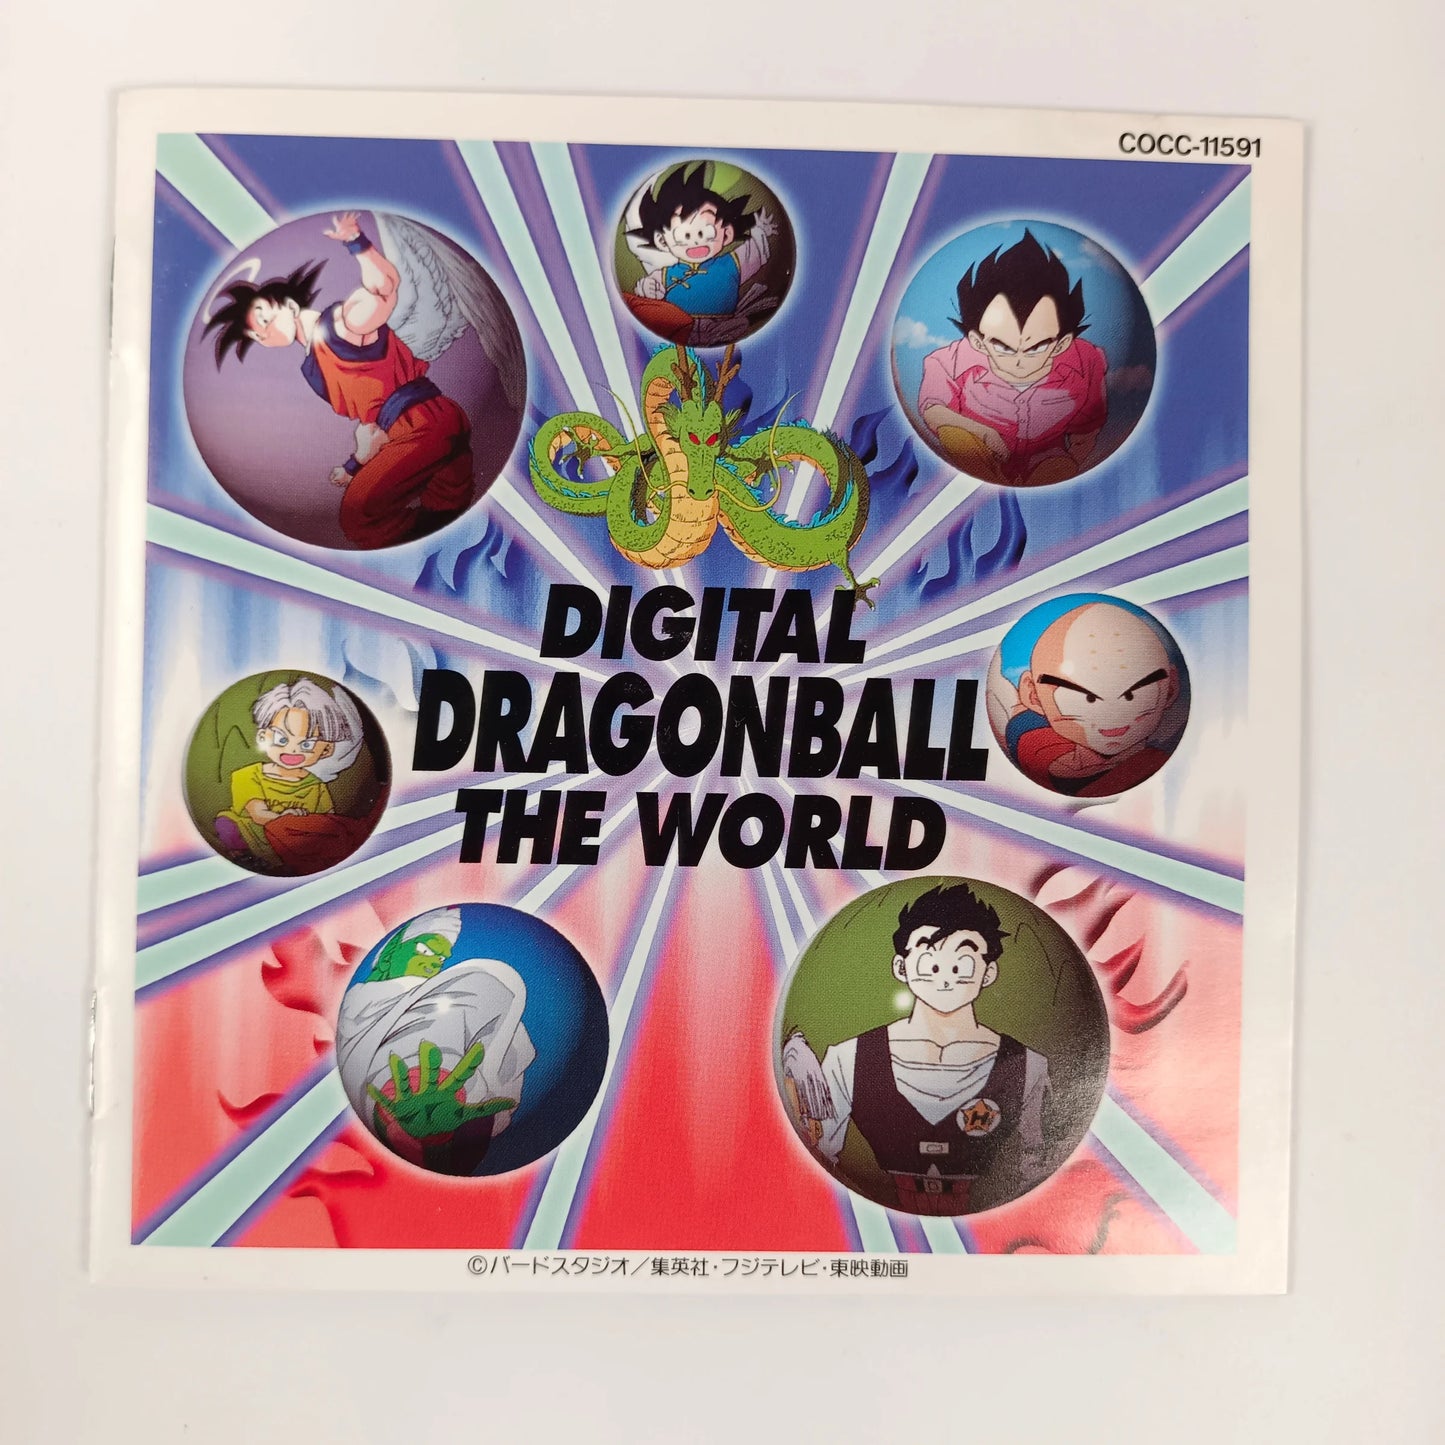 Digital Dragonball The World